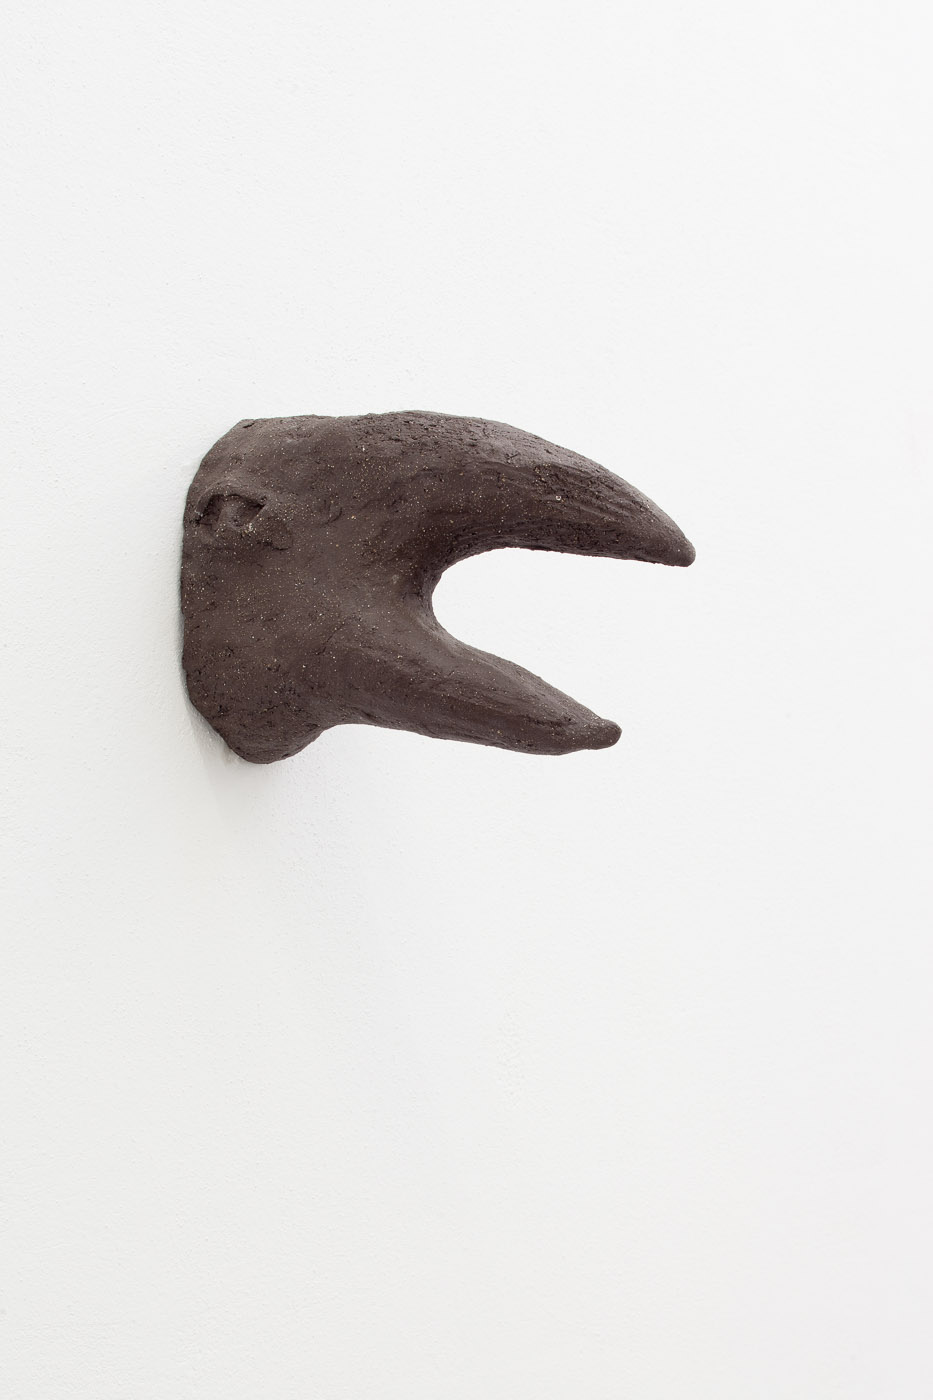 Habima Fuchs, "Bird", 2013